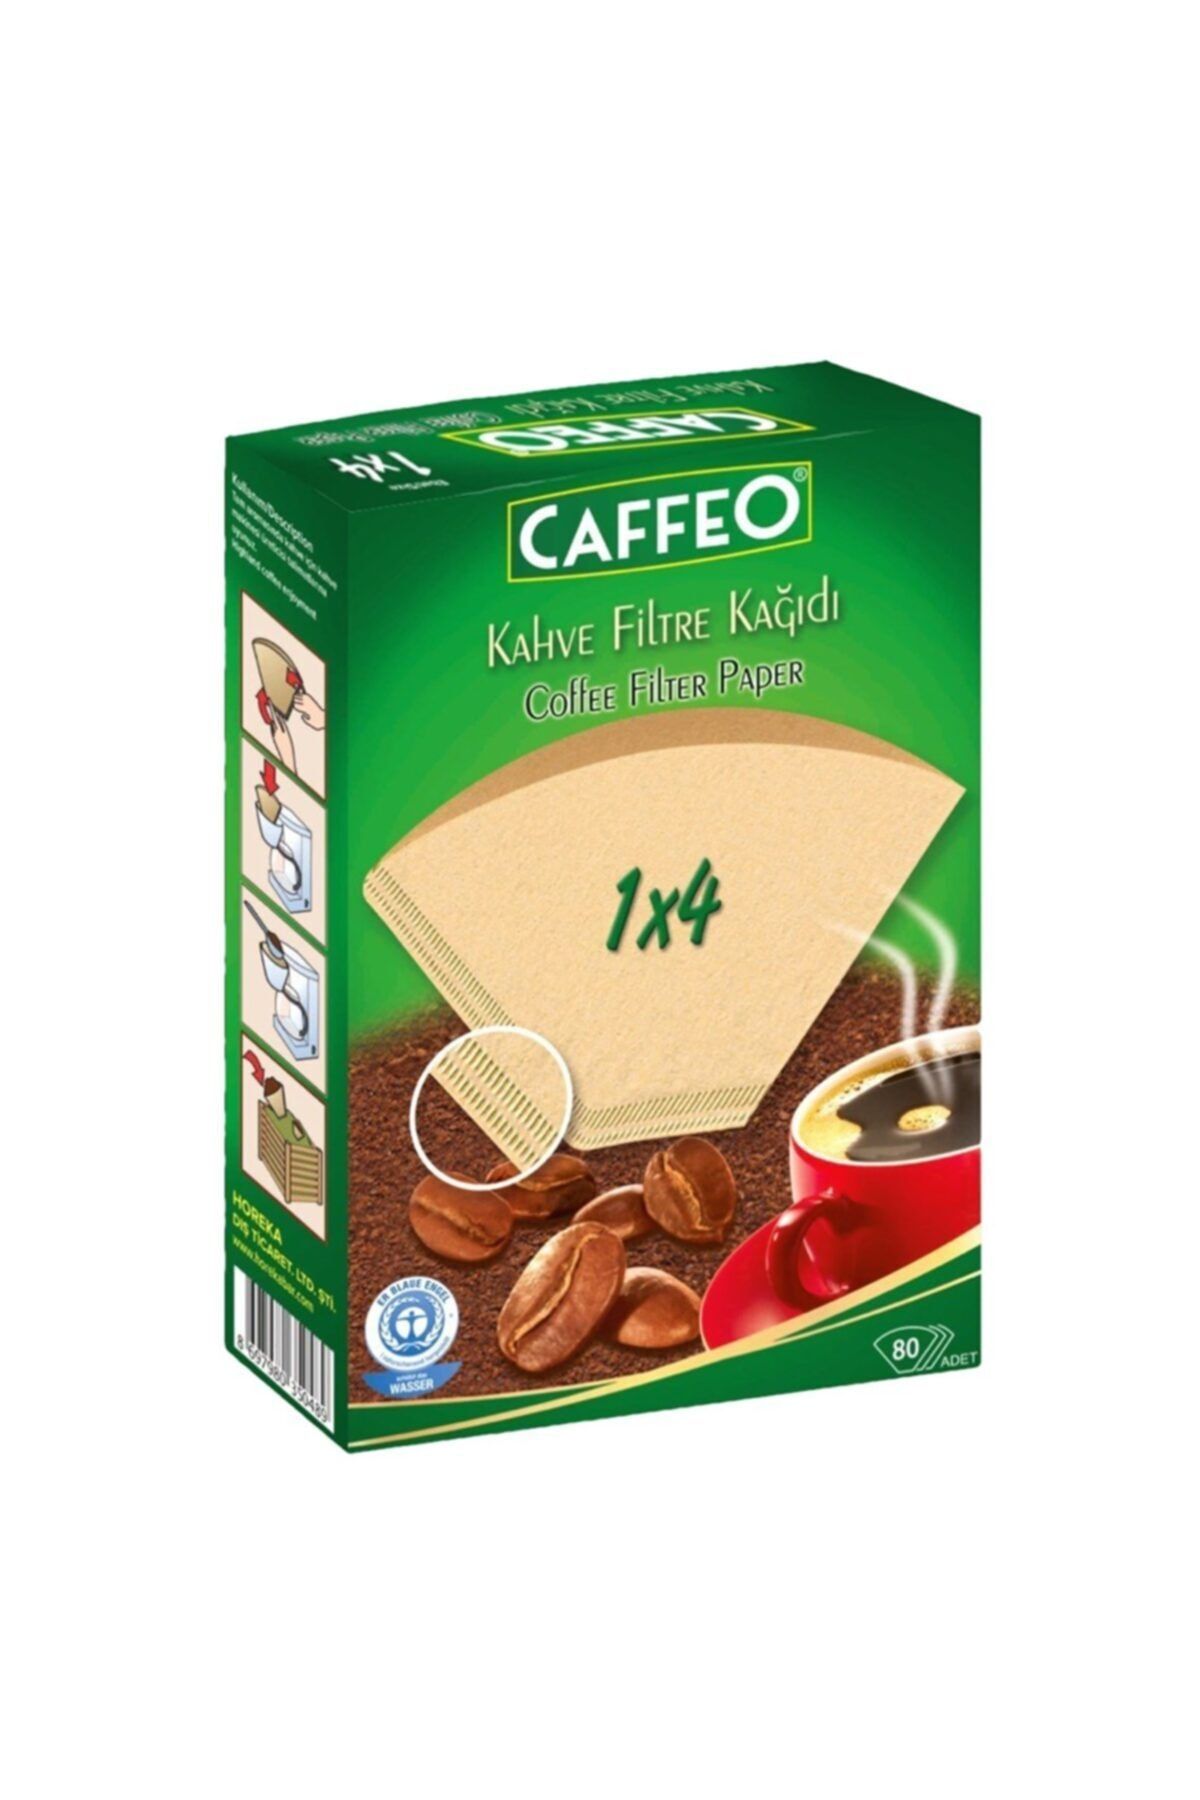 Caffeo 1x4 Kahve Filtre Kağıdı 80 Adet